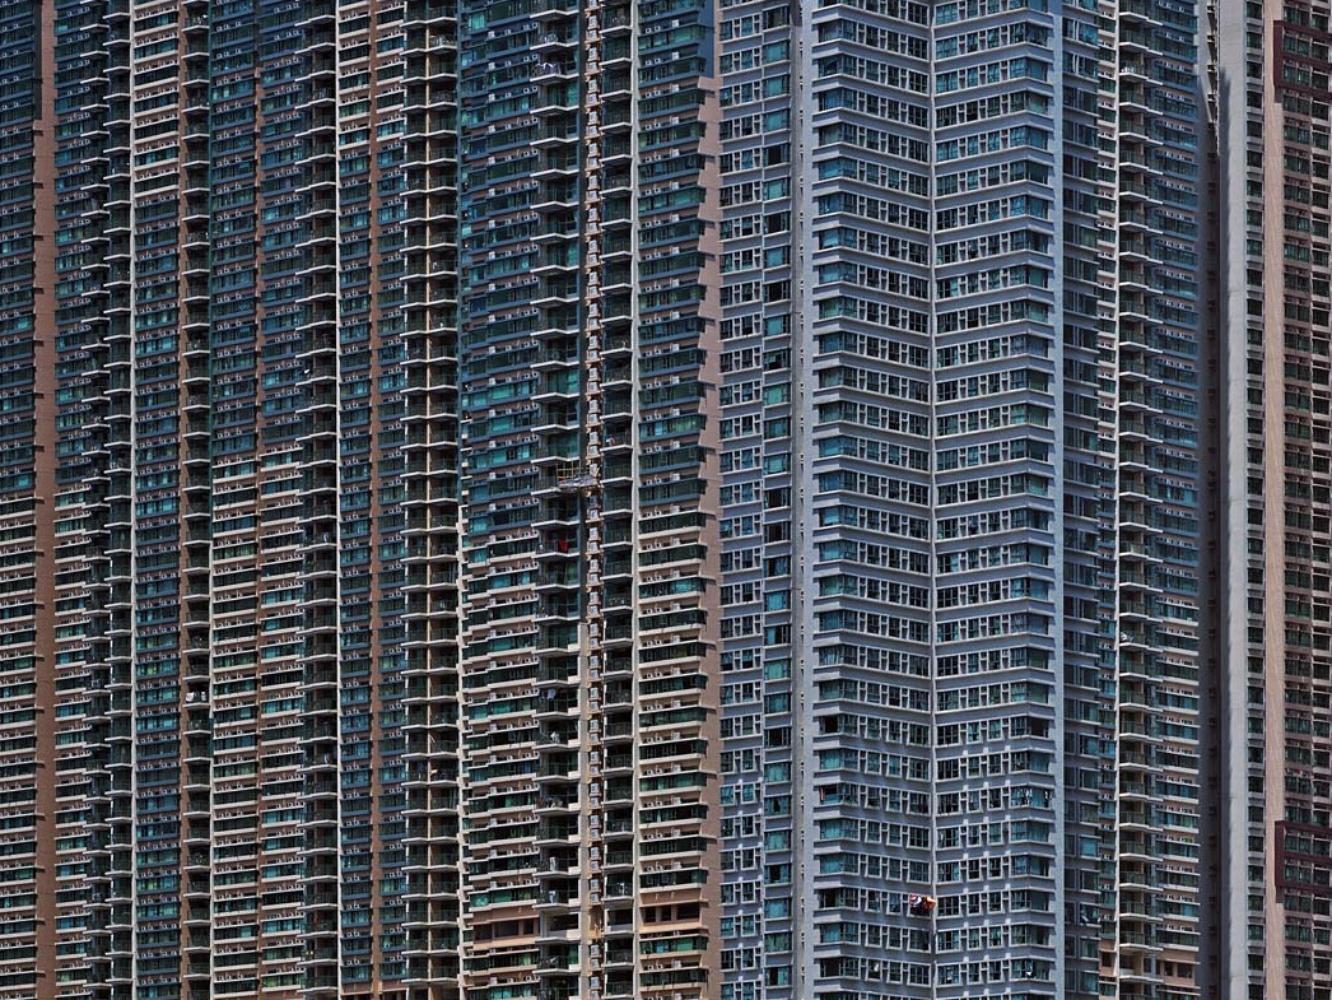 Architecture of Density #57 – Michael Wolf, City, Skyscraper, Architecture, Art For Sale 1